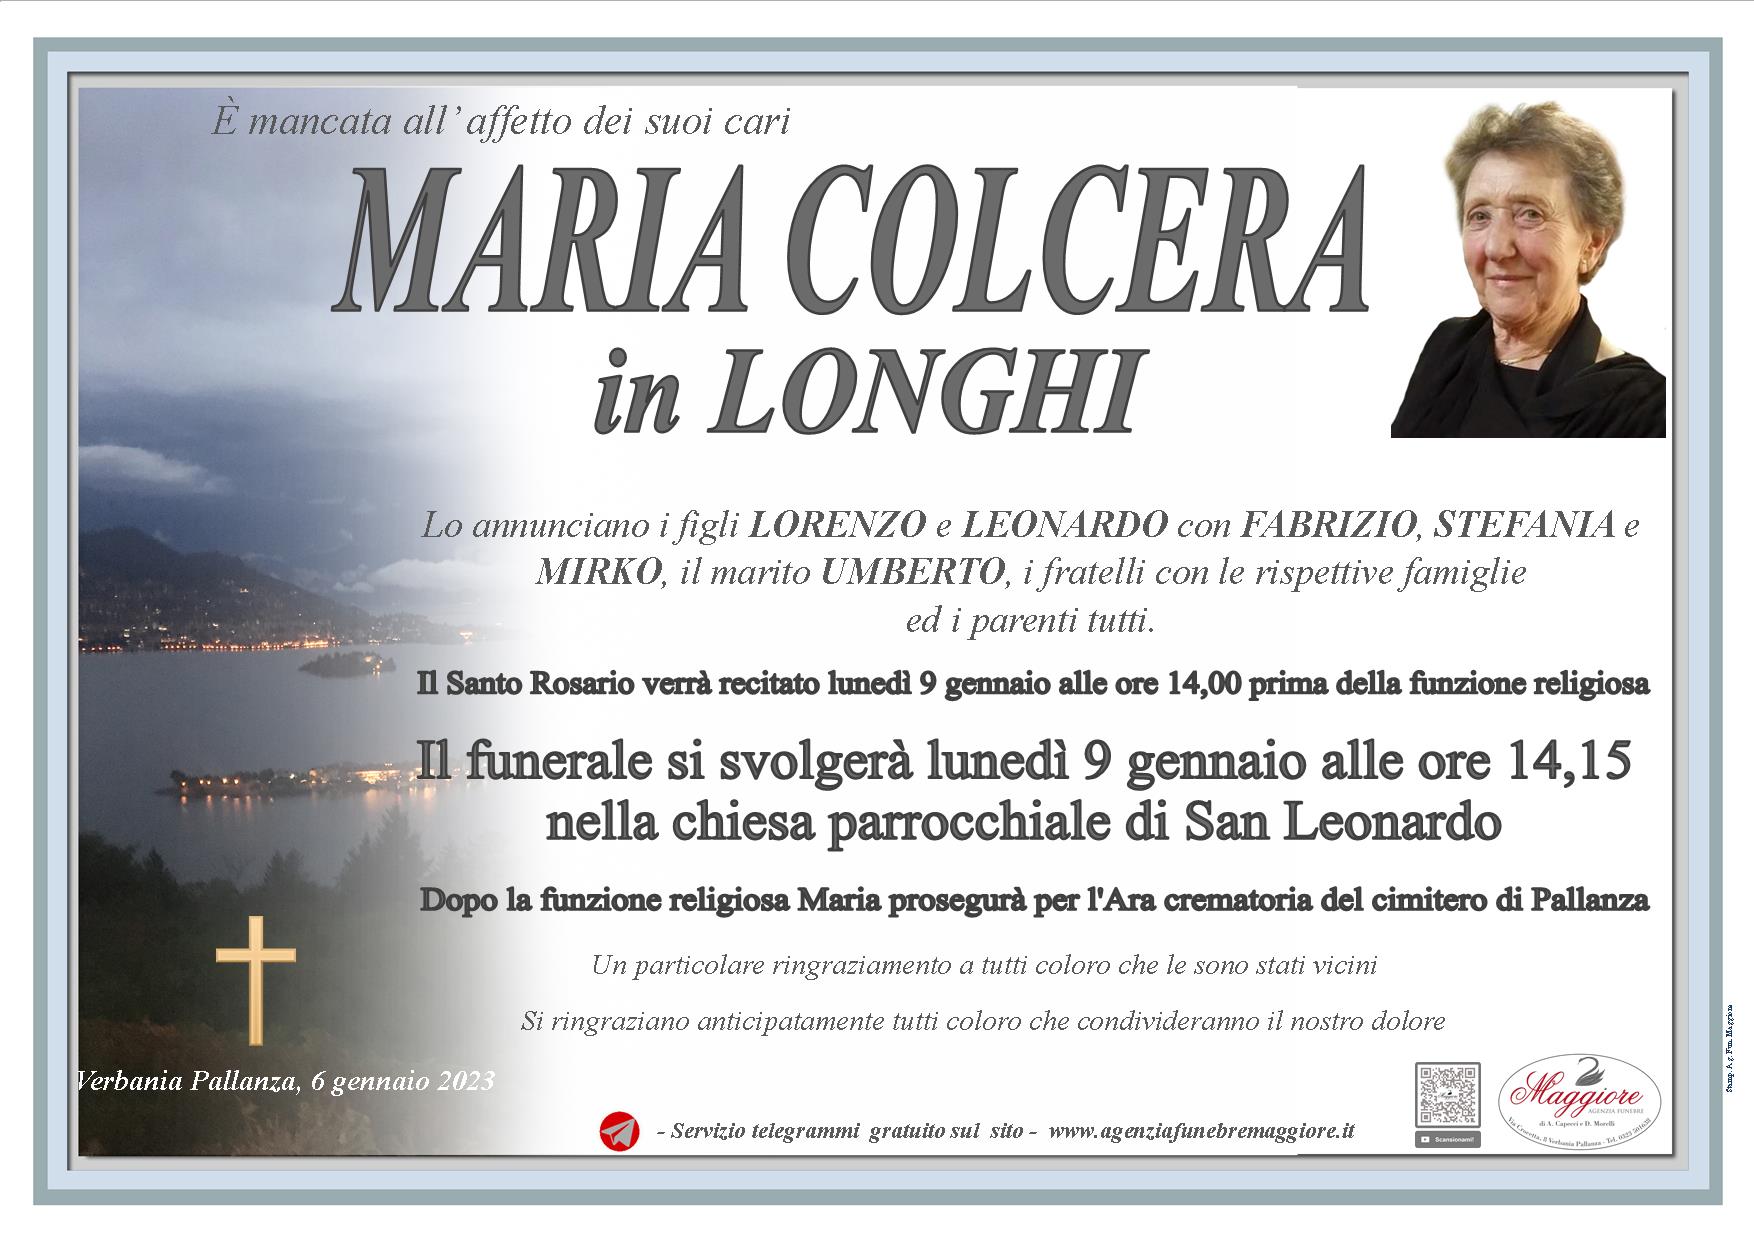 Maria Colcera ved. in Longhi